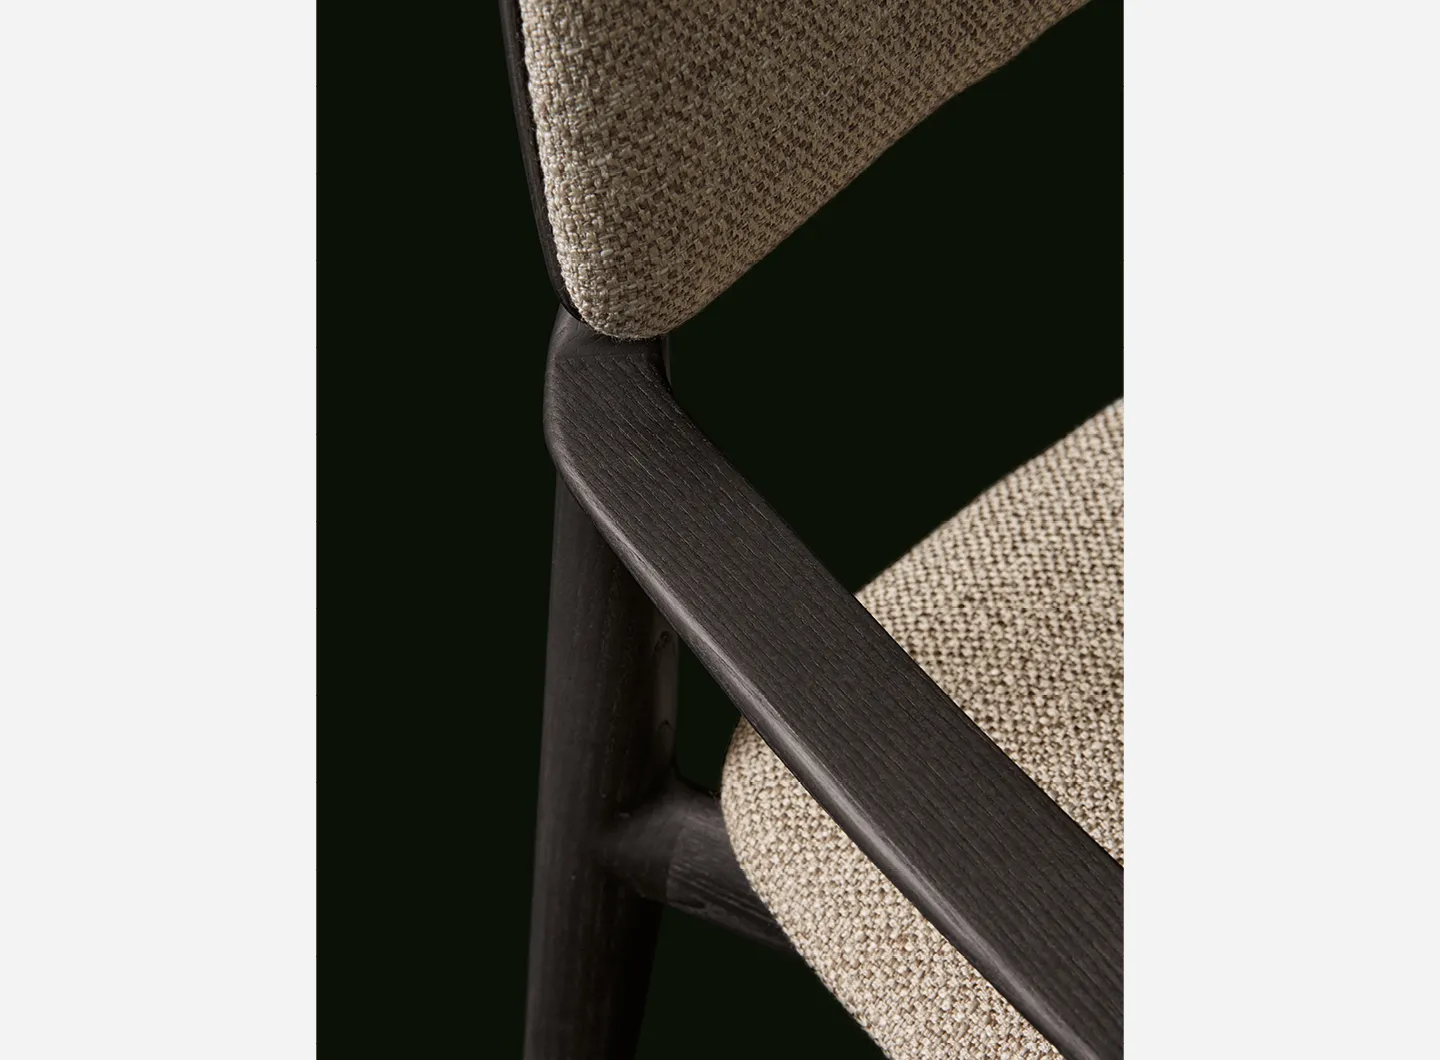 Curve chair, design by E Gallina